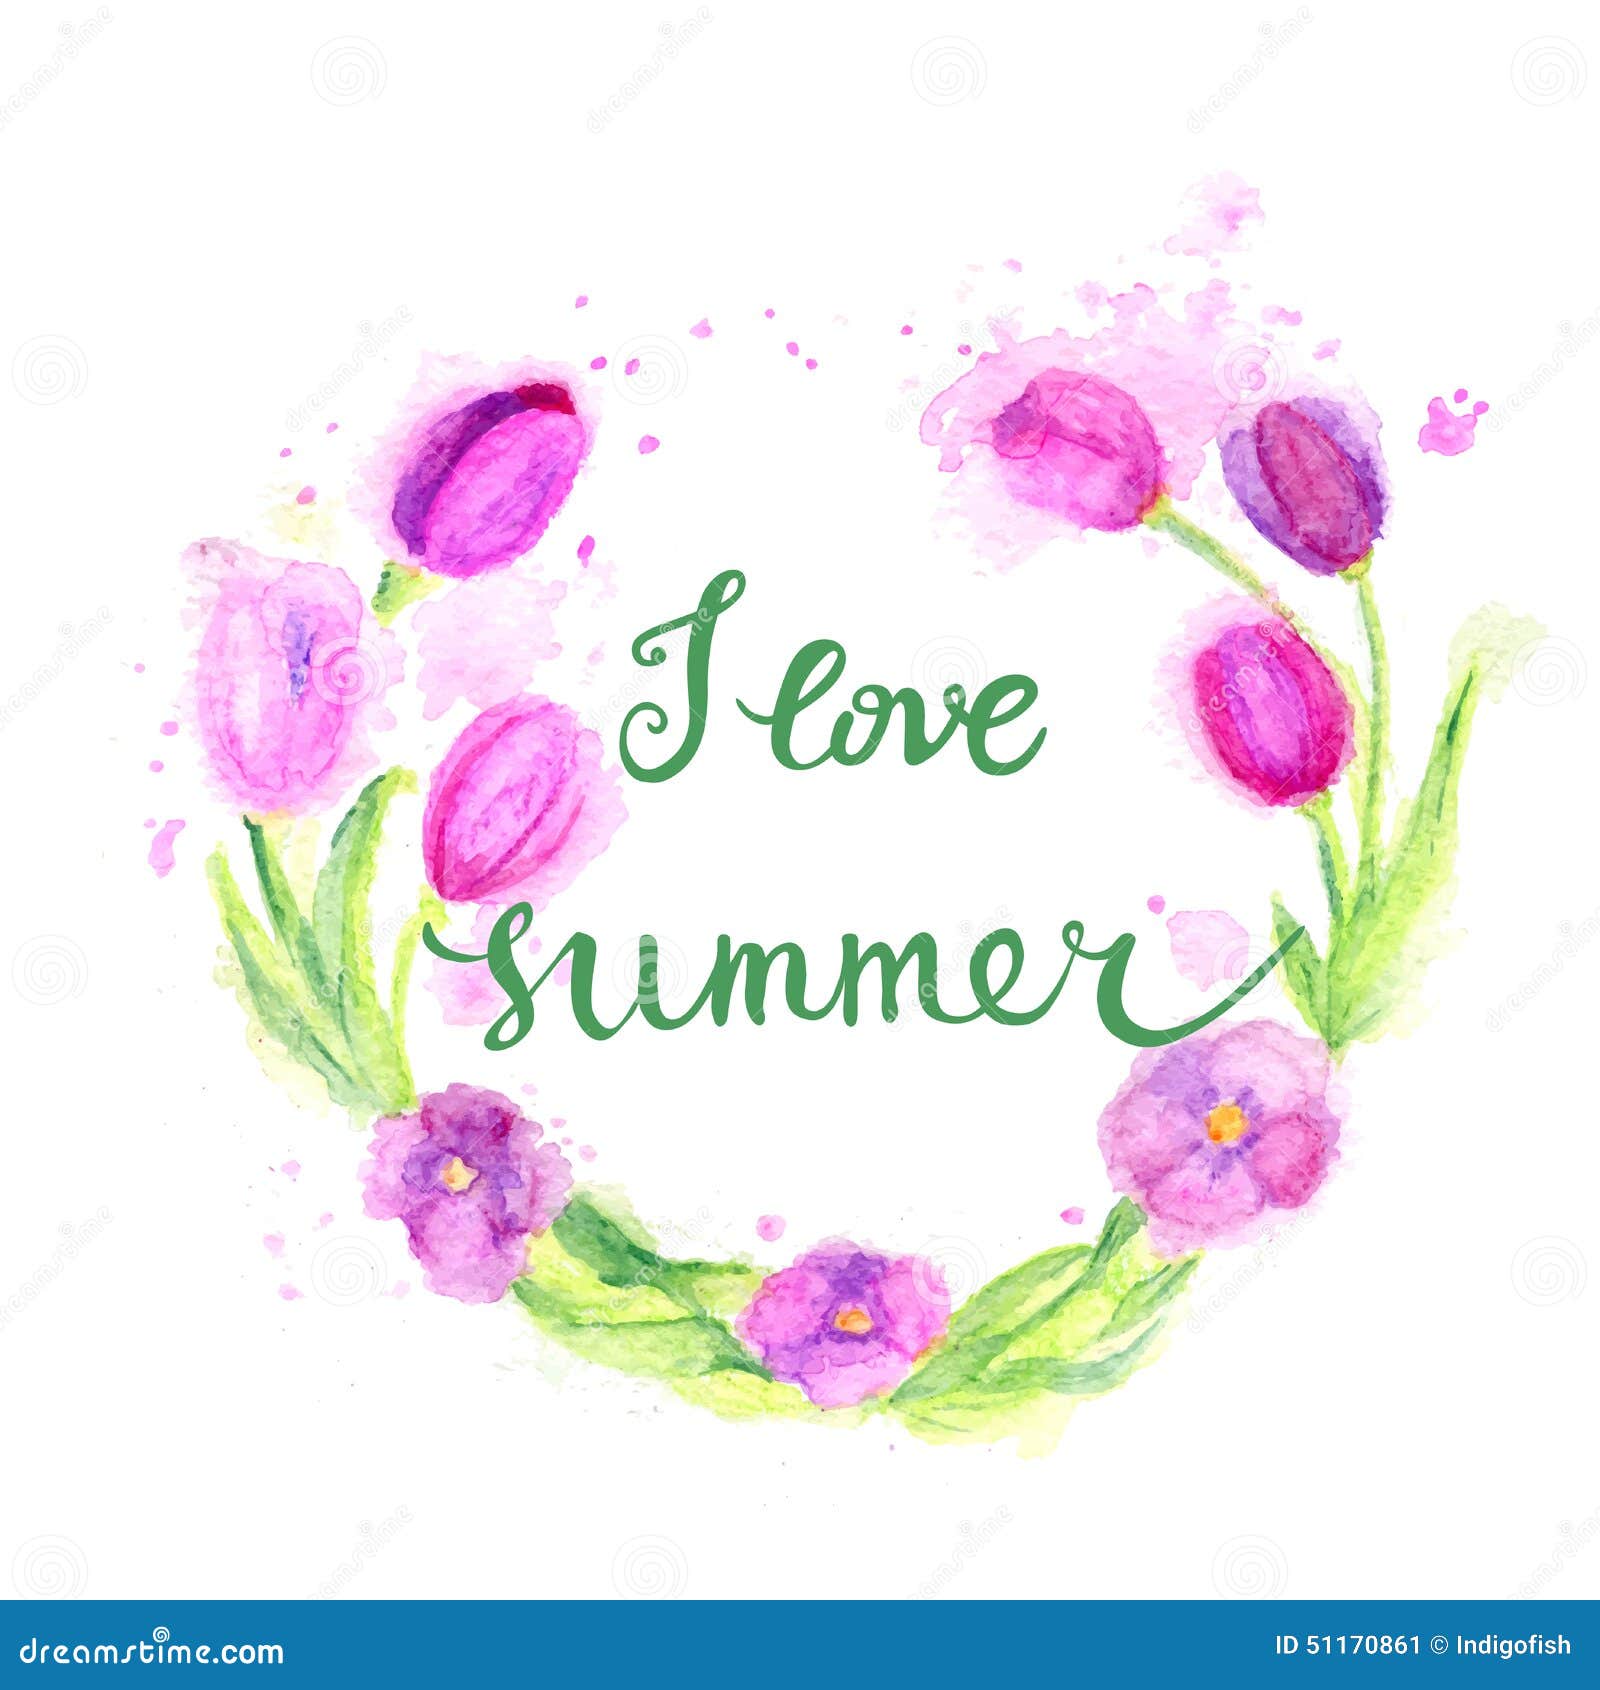 I Love Summer stock vector. Illustration of hand, design - 51170861